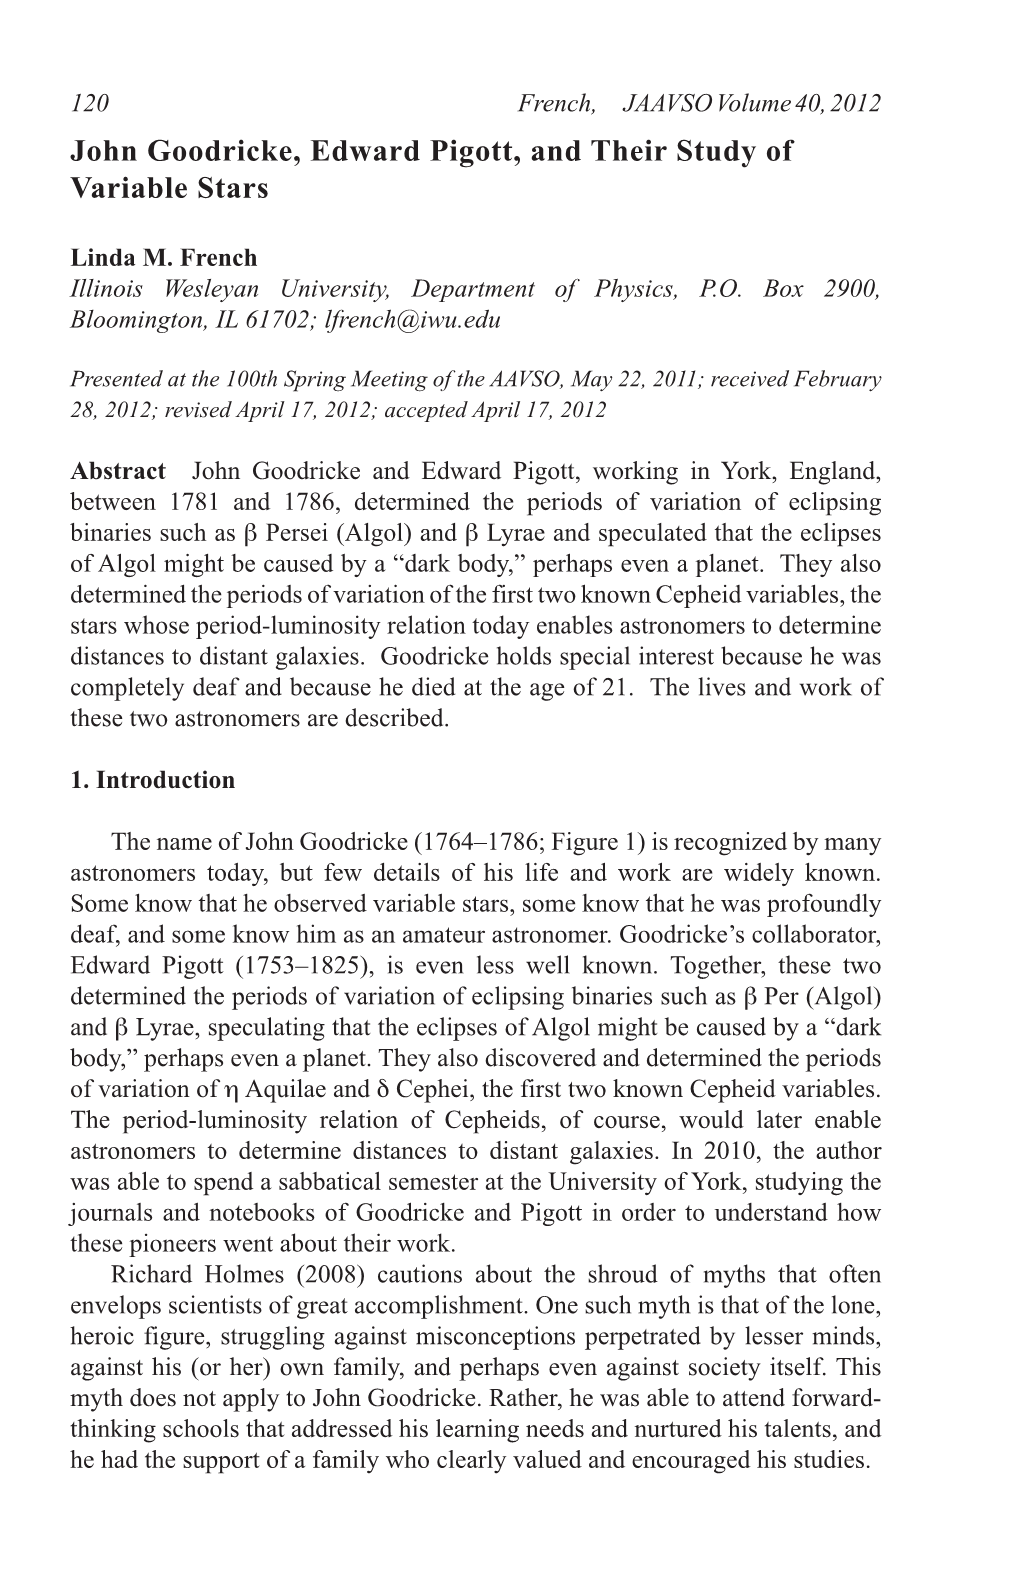 John Goodricke, Edward Pigott, and Their Study of Variable Stars